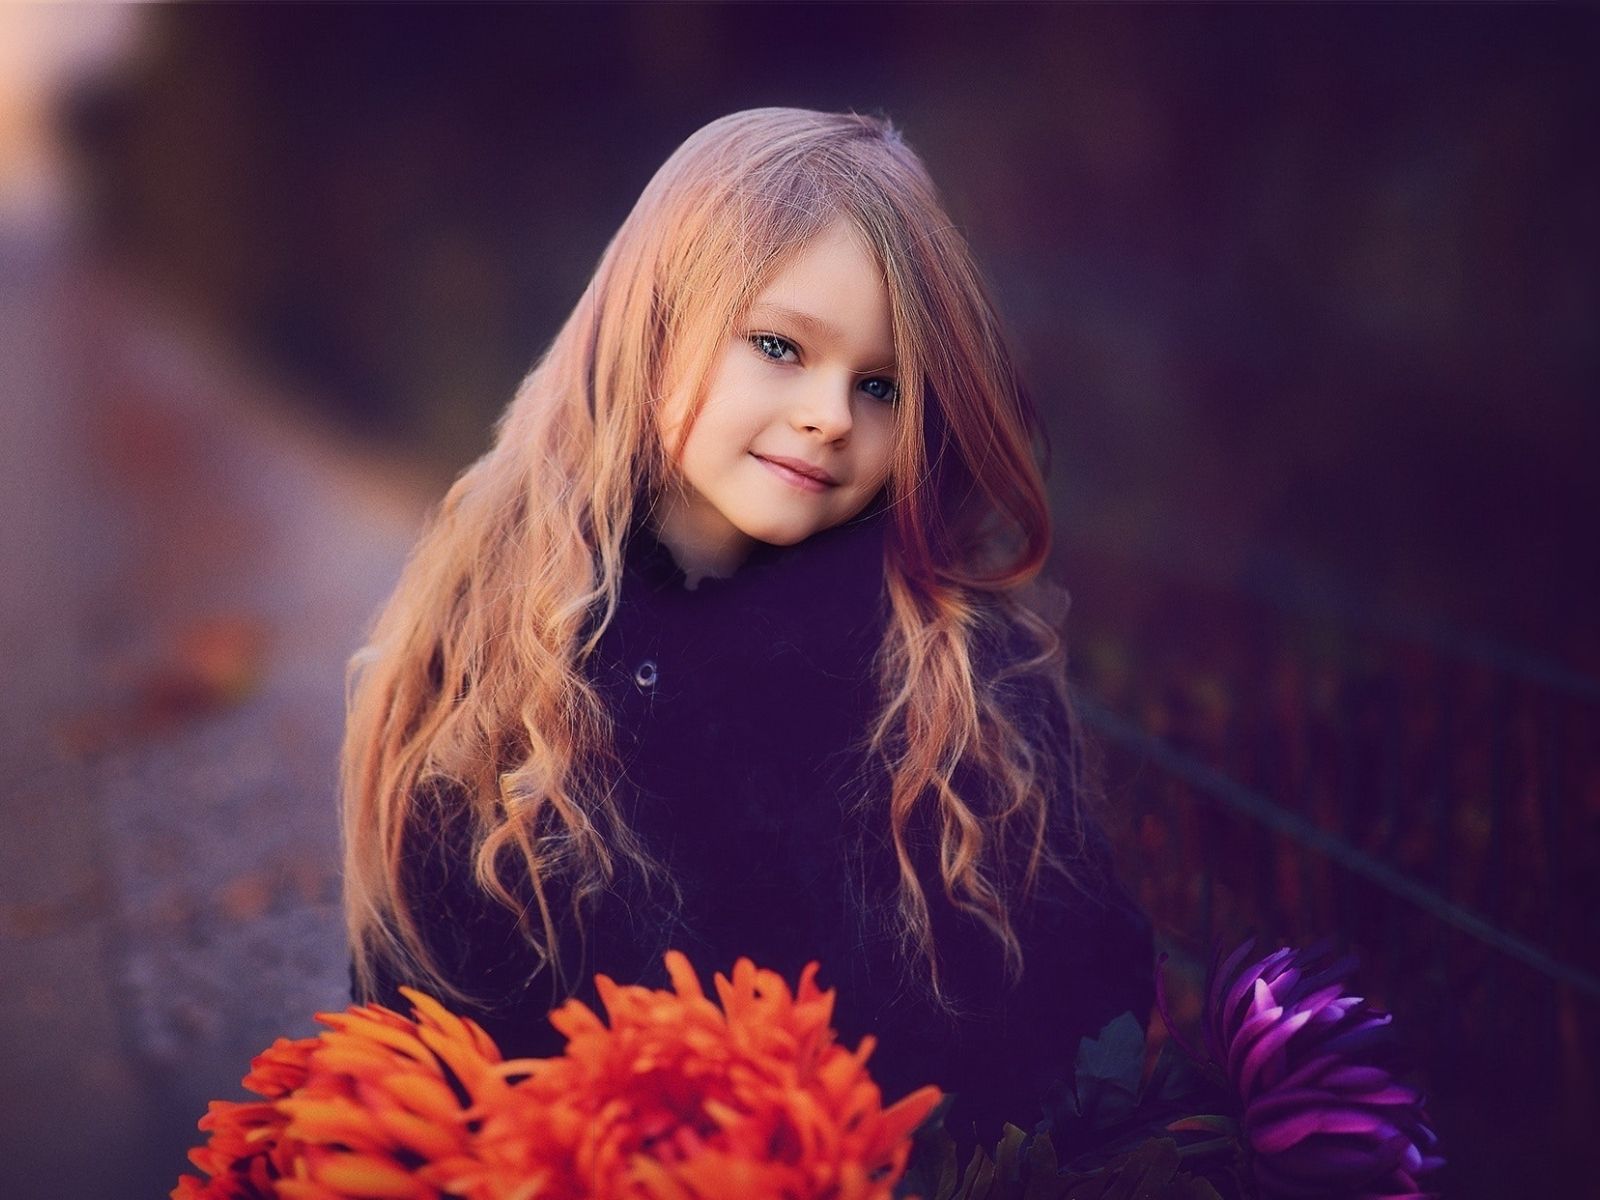 Download 1600x1200 wallpaper cute, little girl, flowers, standard 4: fullscreen, 1600x1200 HD image, background, 15081